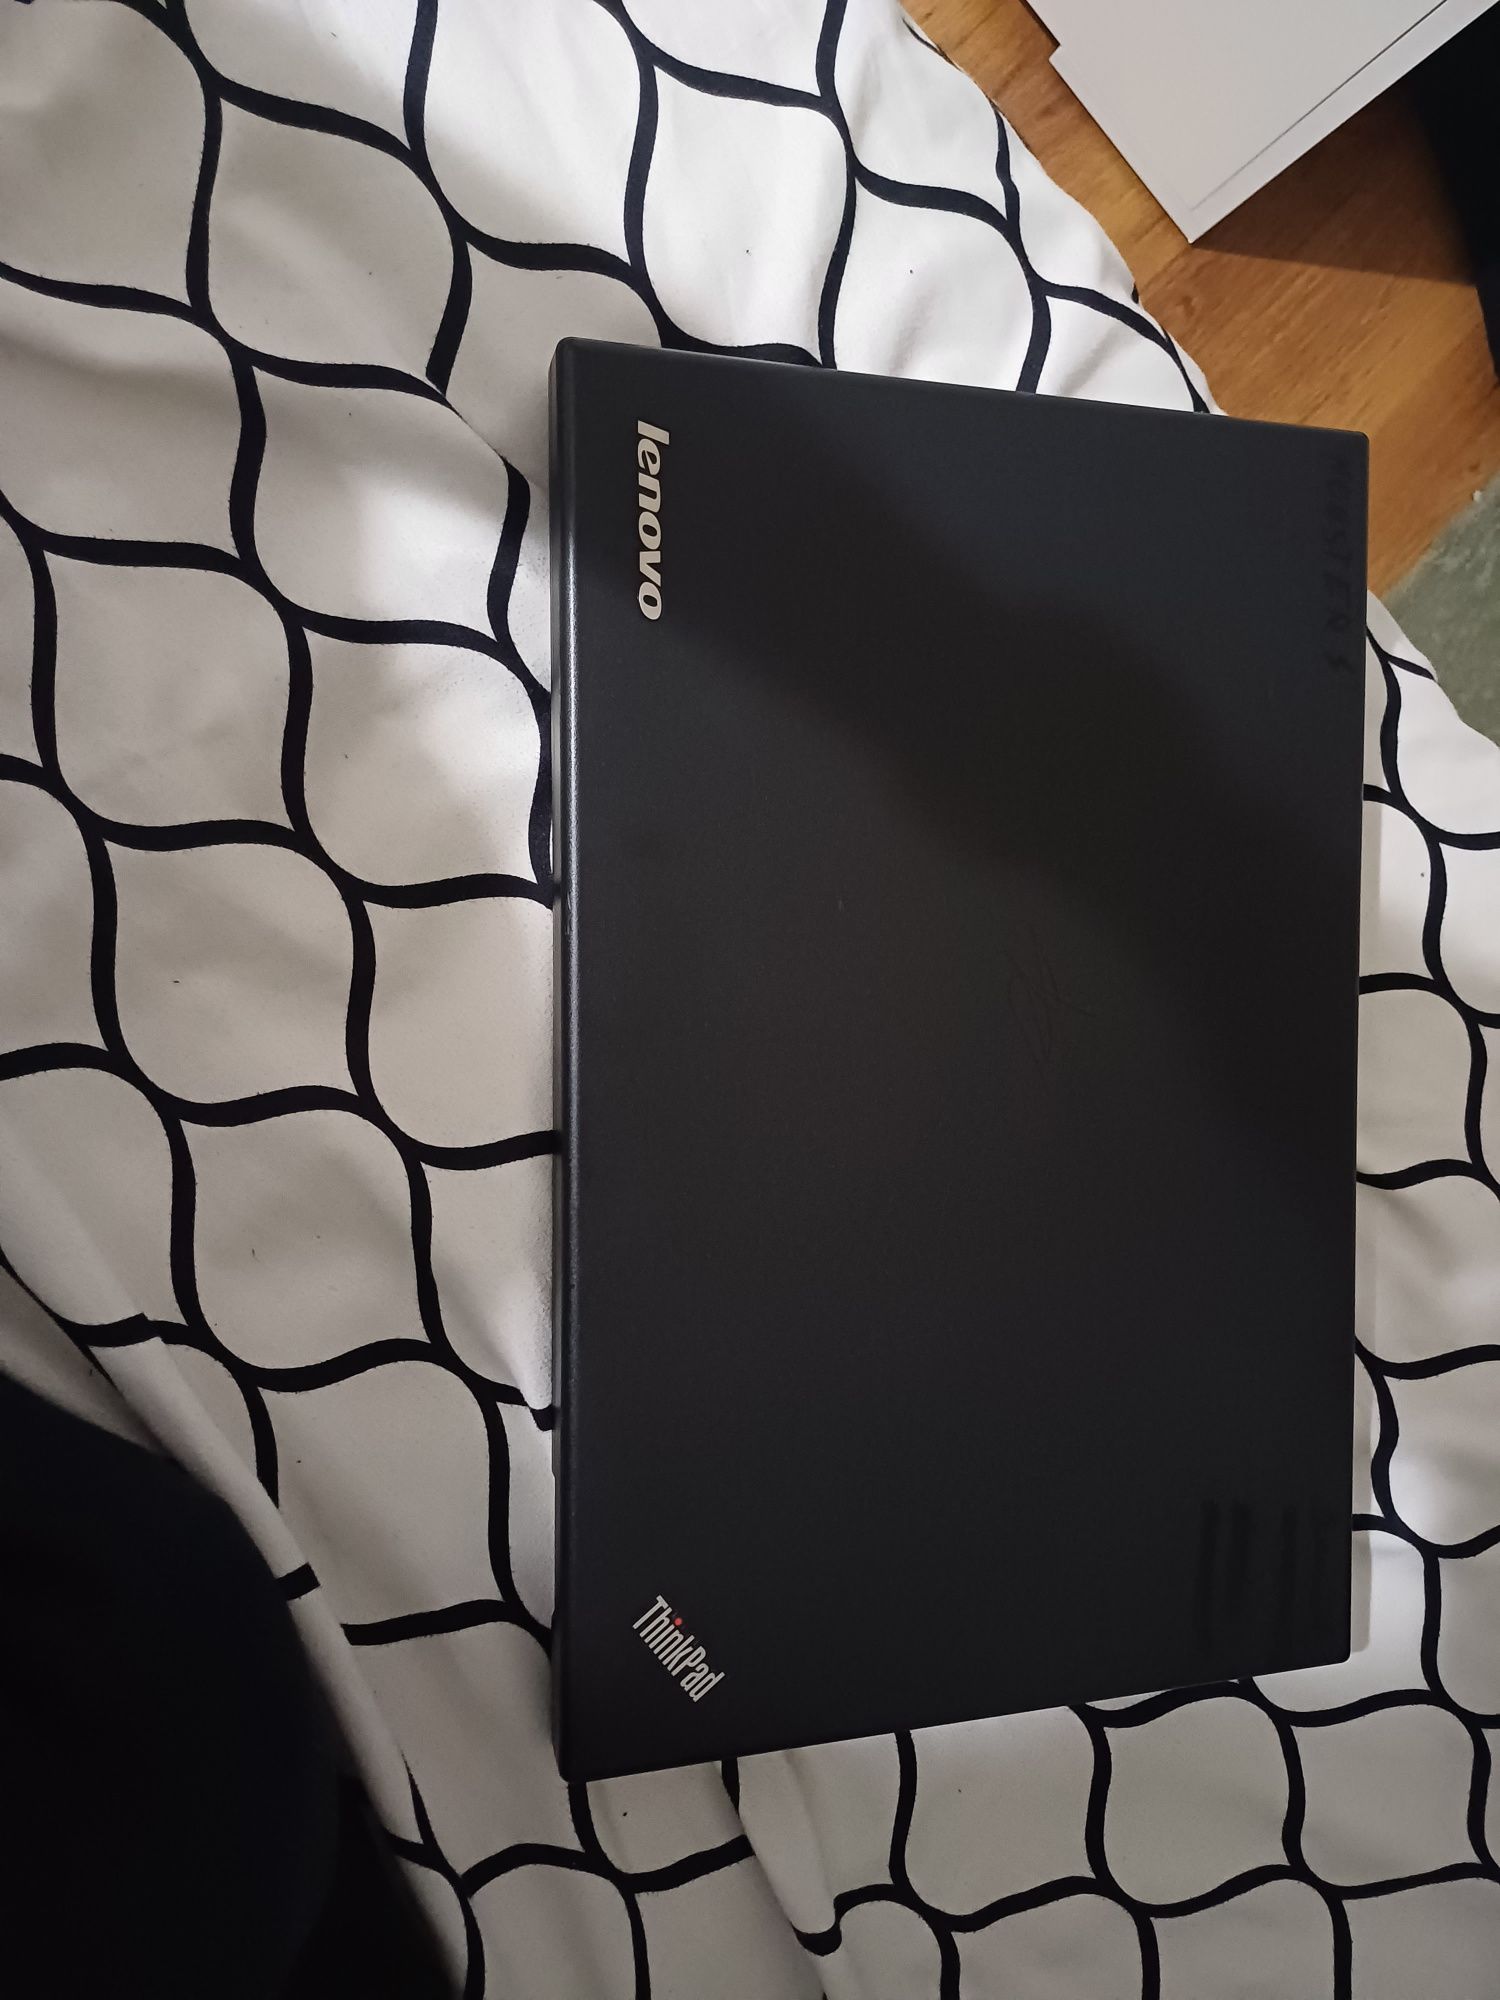 Laptop Lenovo ThinkPad, i3, GeForce 1030 +încărcator ,husă și mouse o